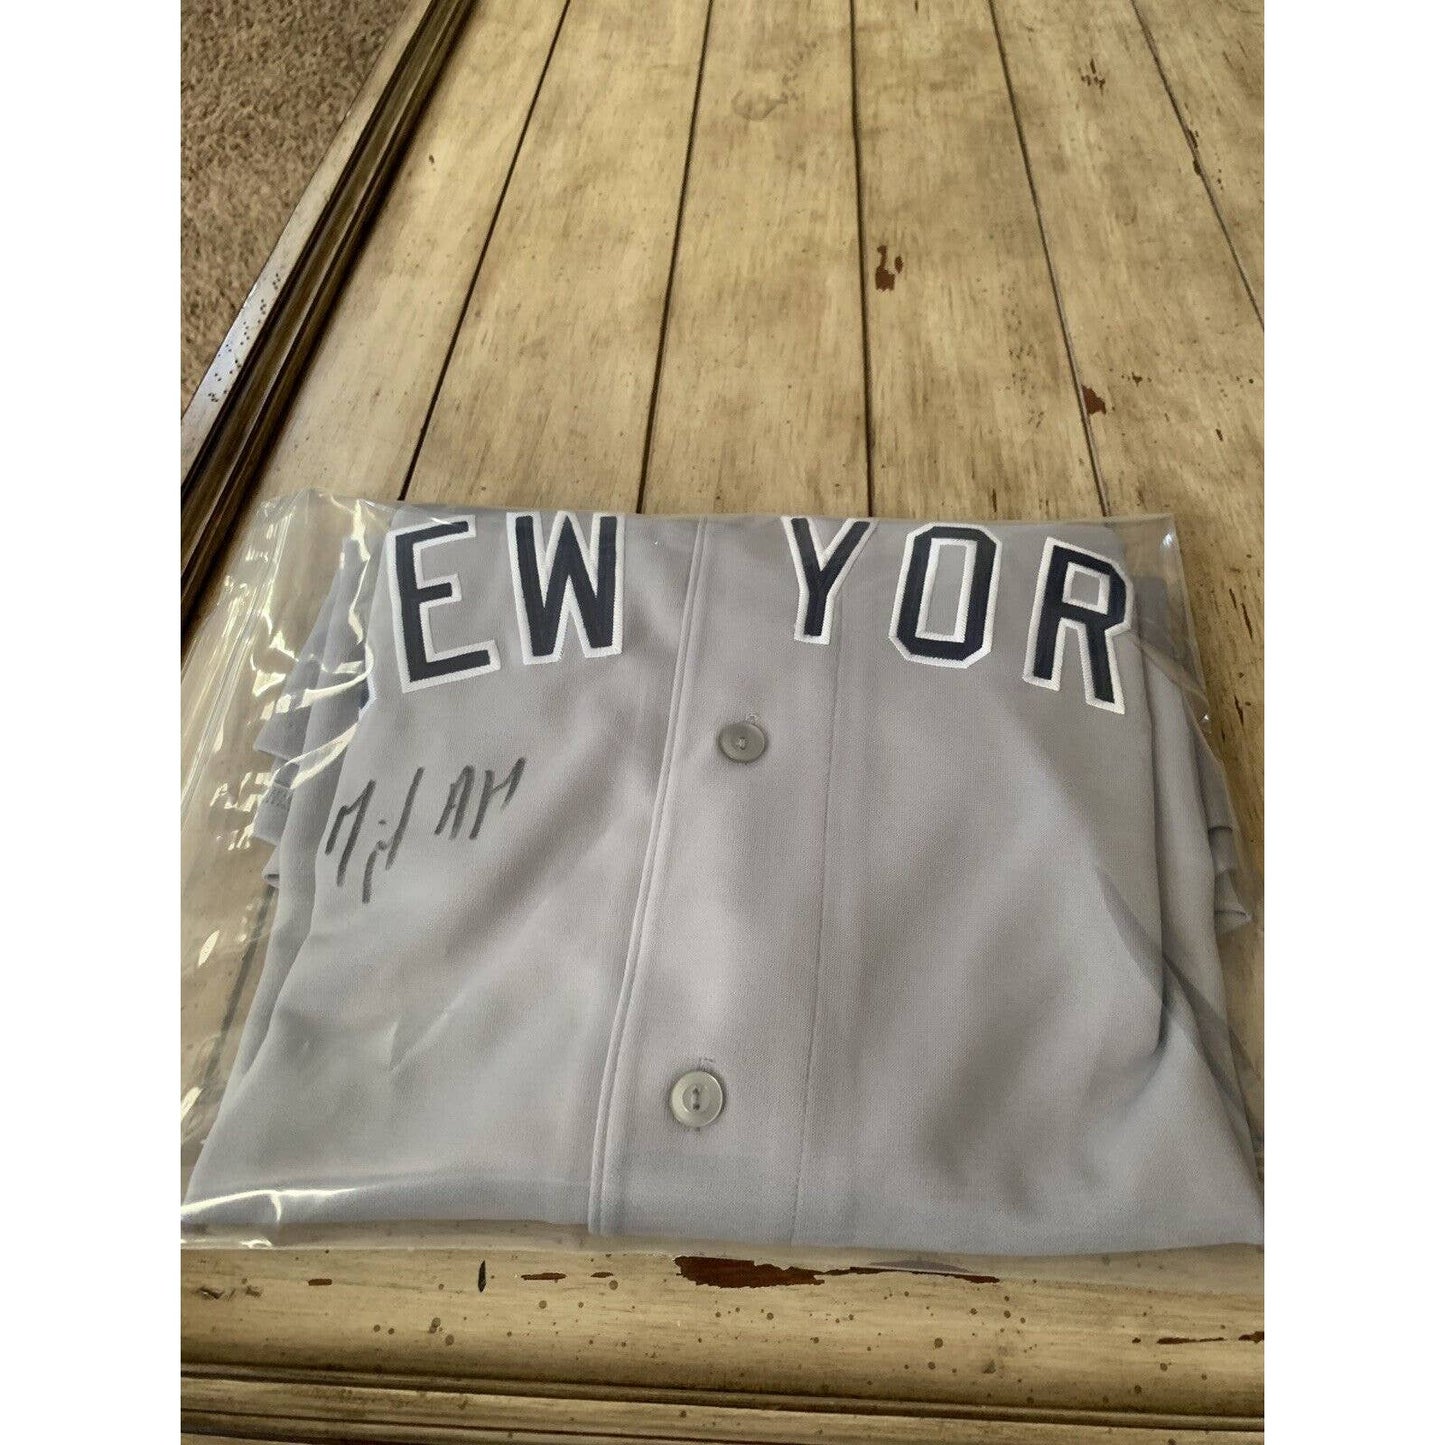 Miguel Andujar Autographed/Signed Jersey Beckett COA New York Yankees - TreasuresEvolved